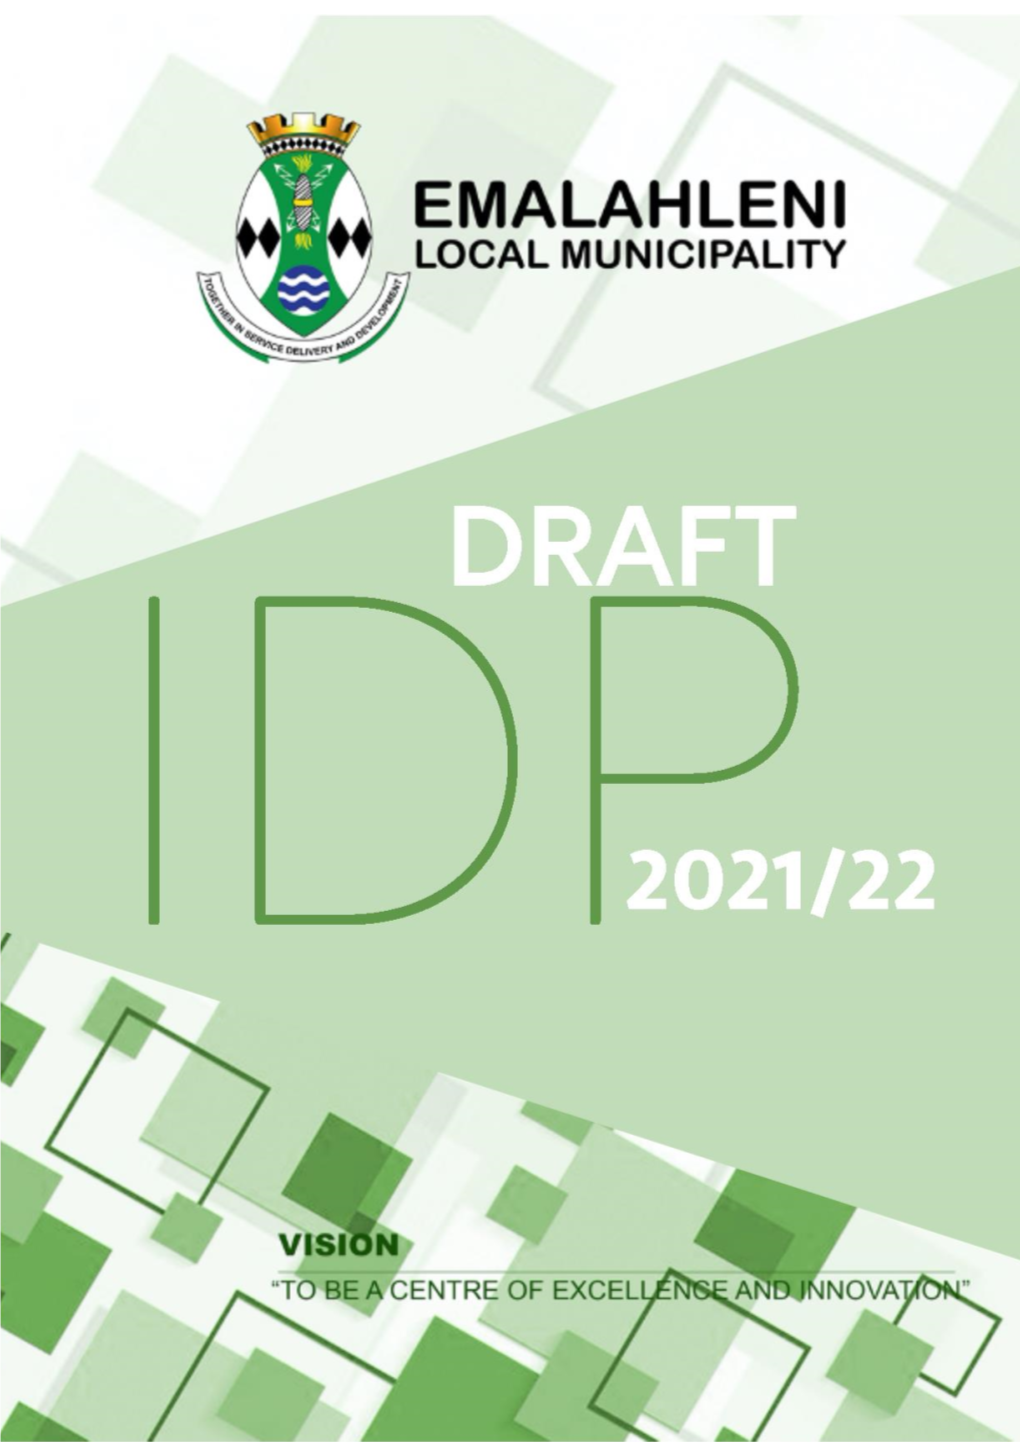 Draft Idp 2021/22